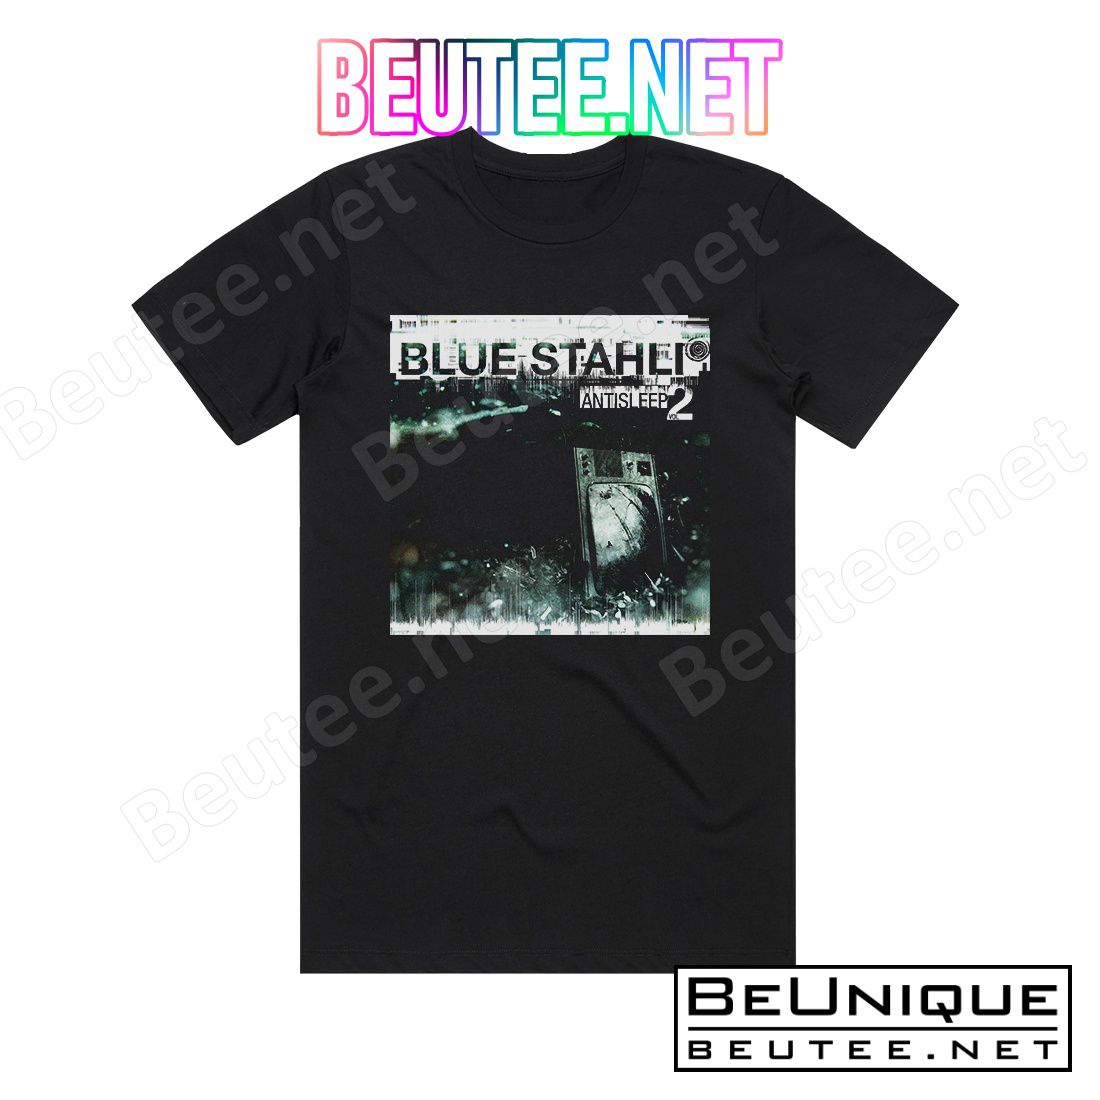 Blue Stahli Antisleep Volume 02 Album Cover T-Shirt